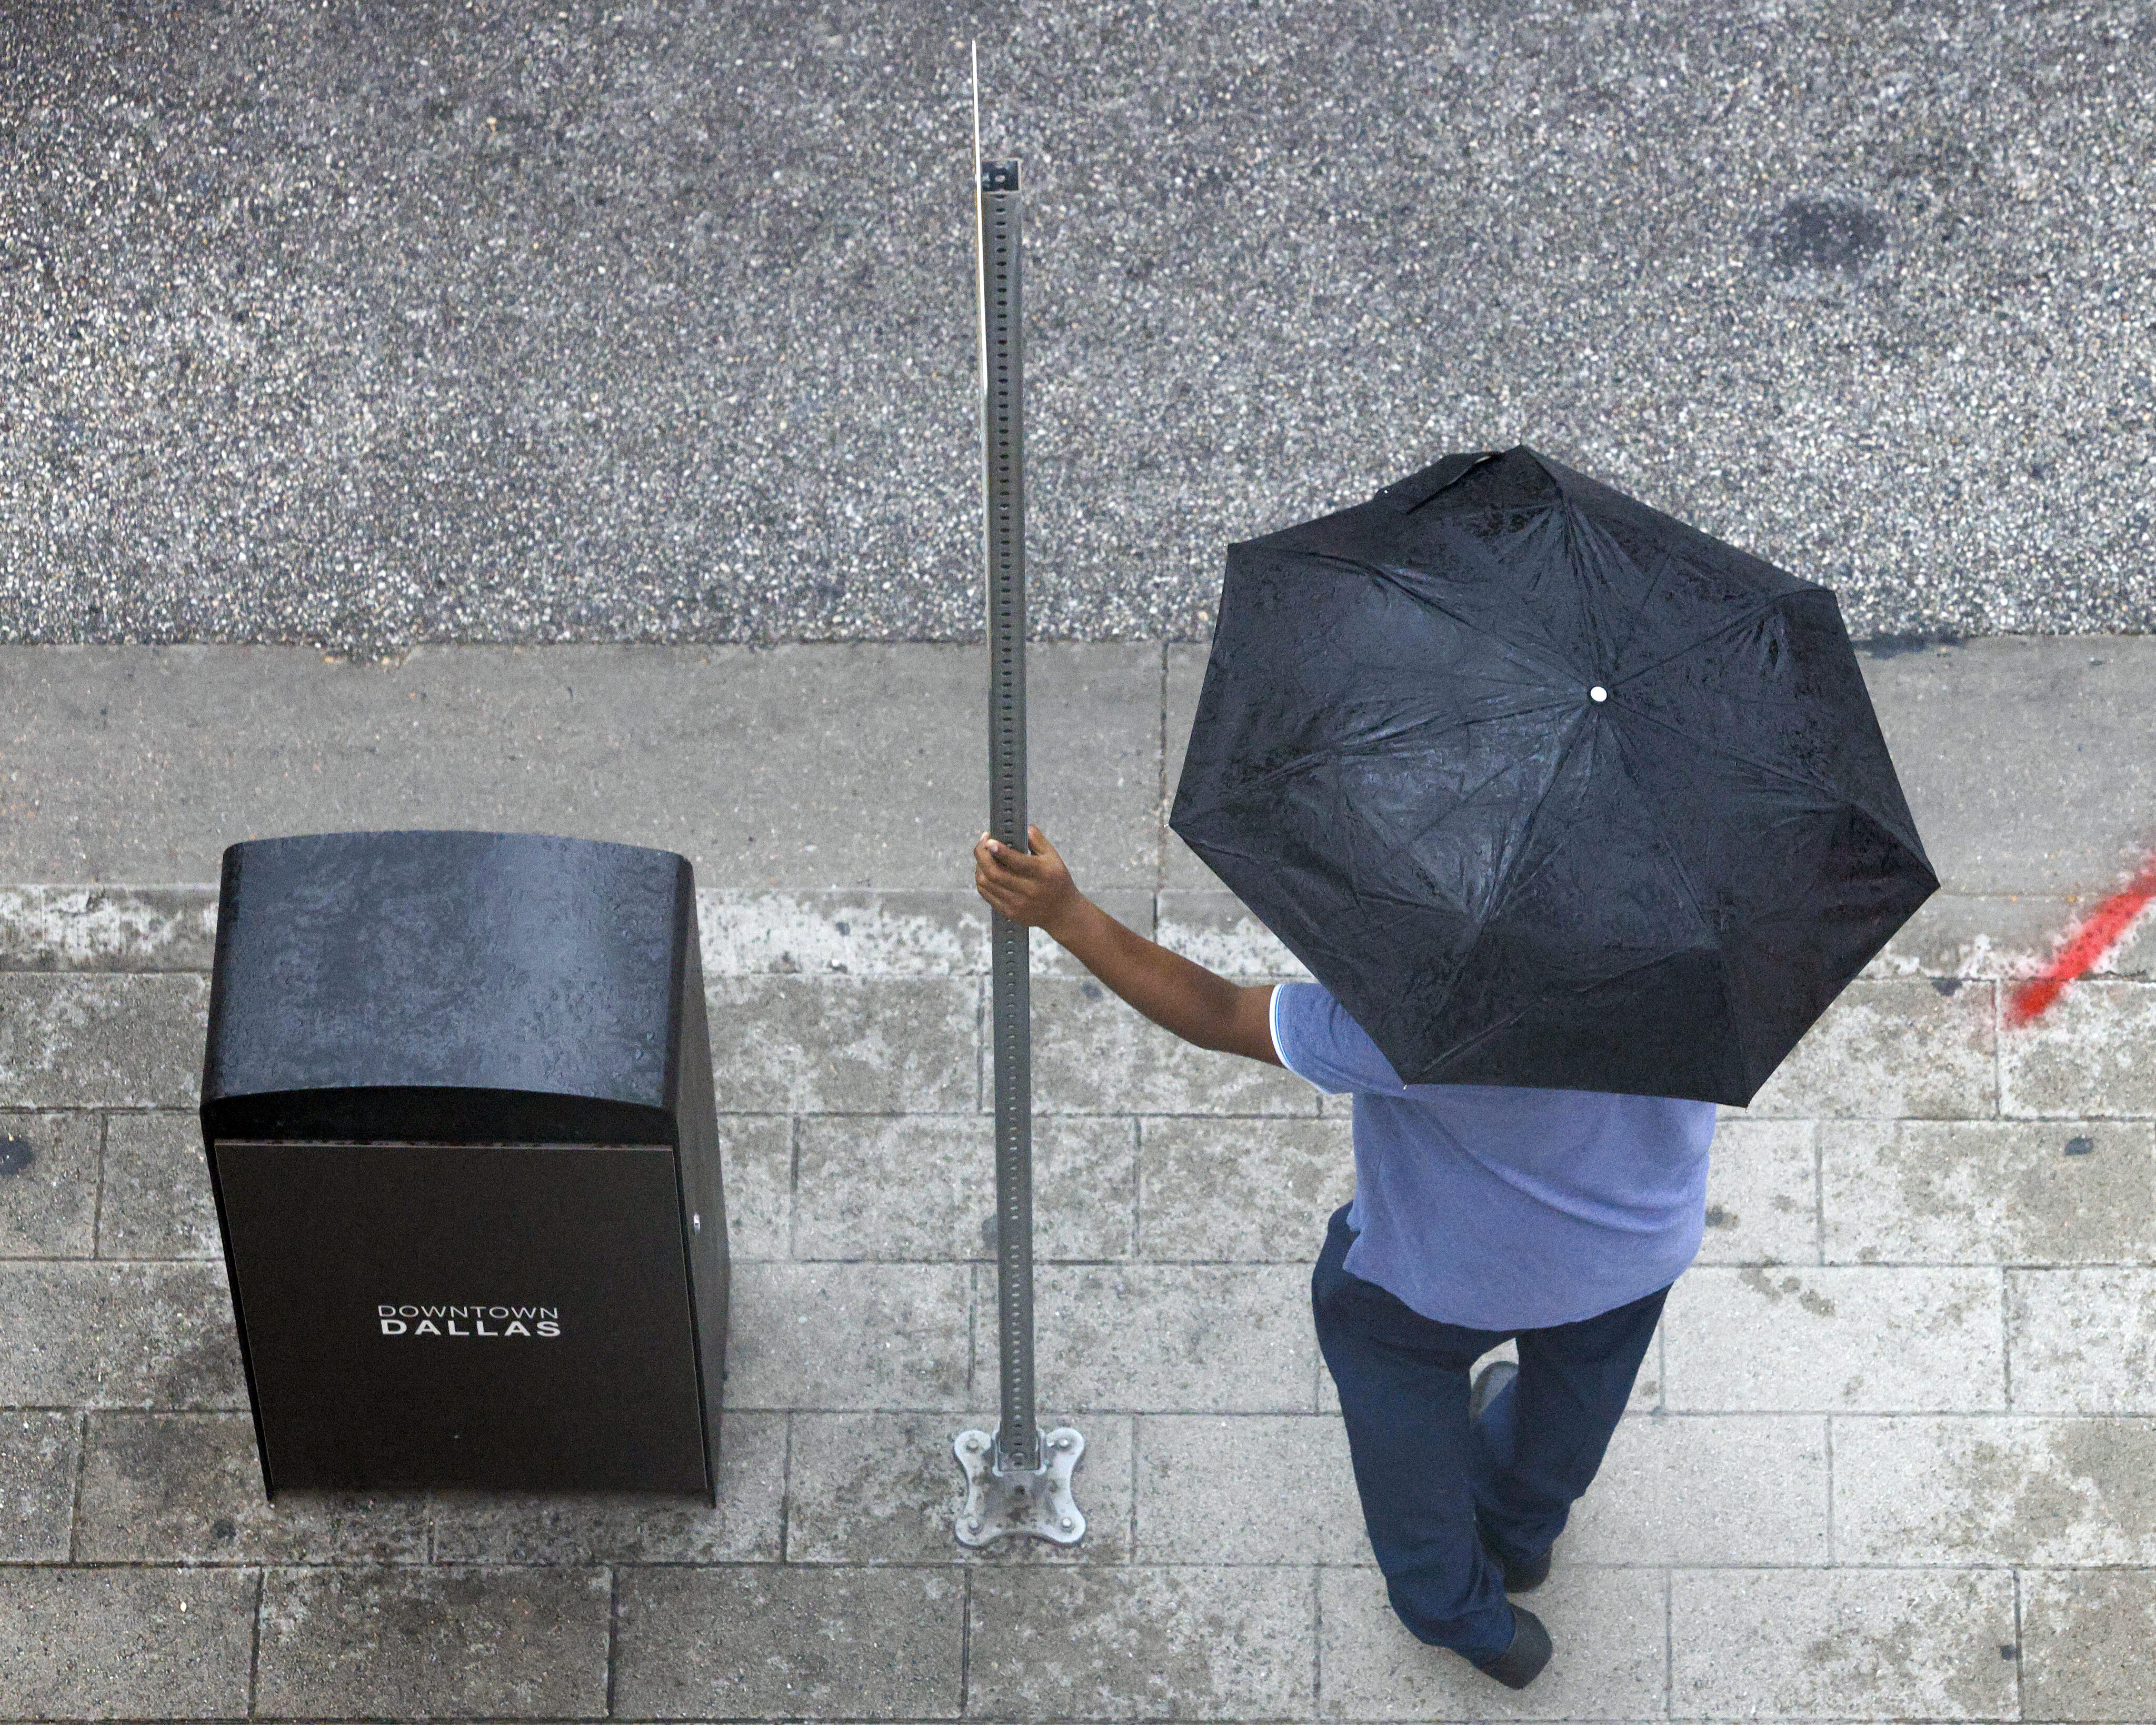 A man waits for a DART bus under an umbrella as rain falls in downtown Dallas, Wednesday,...